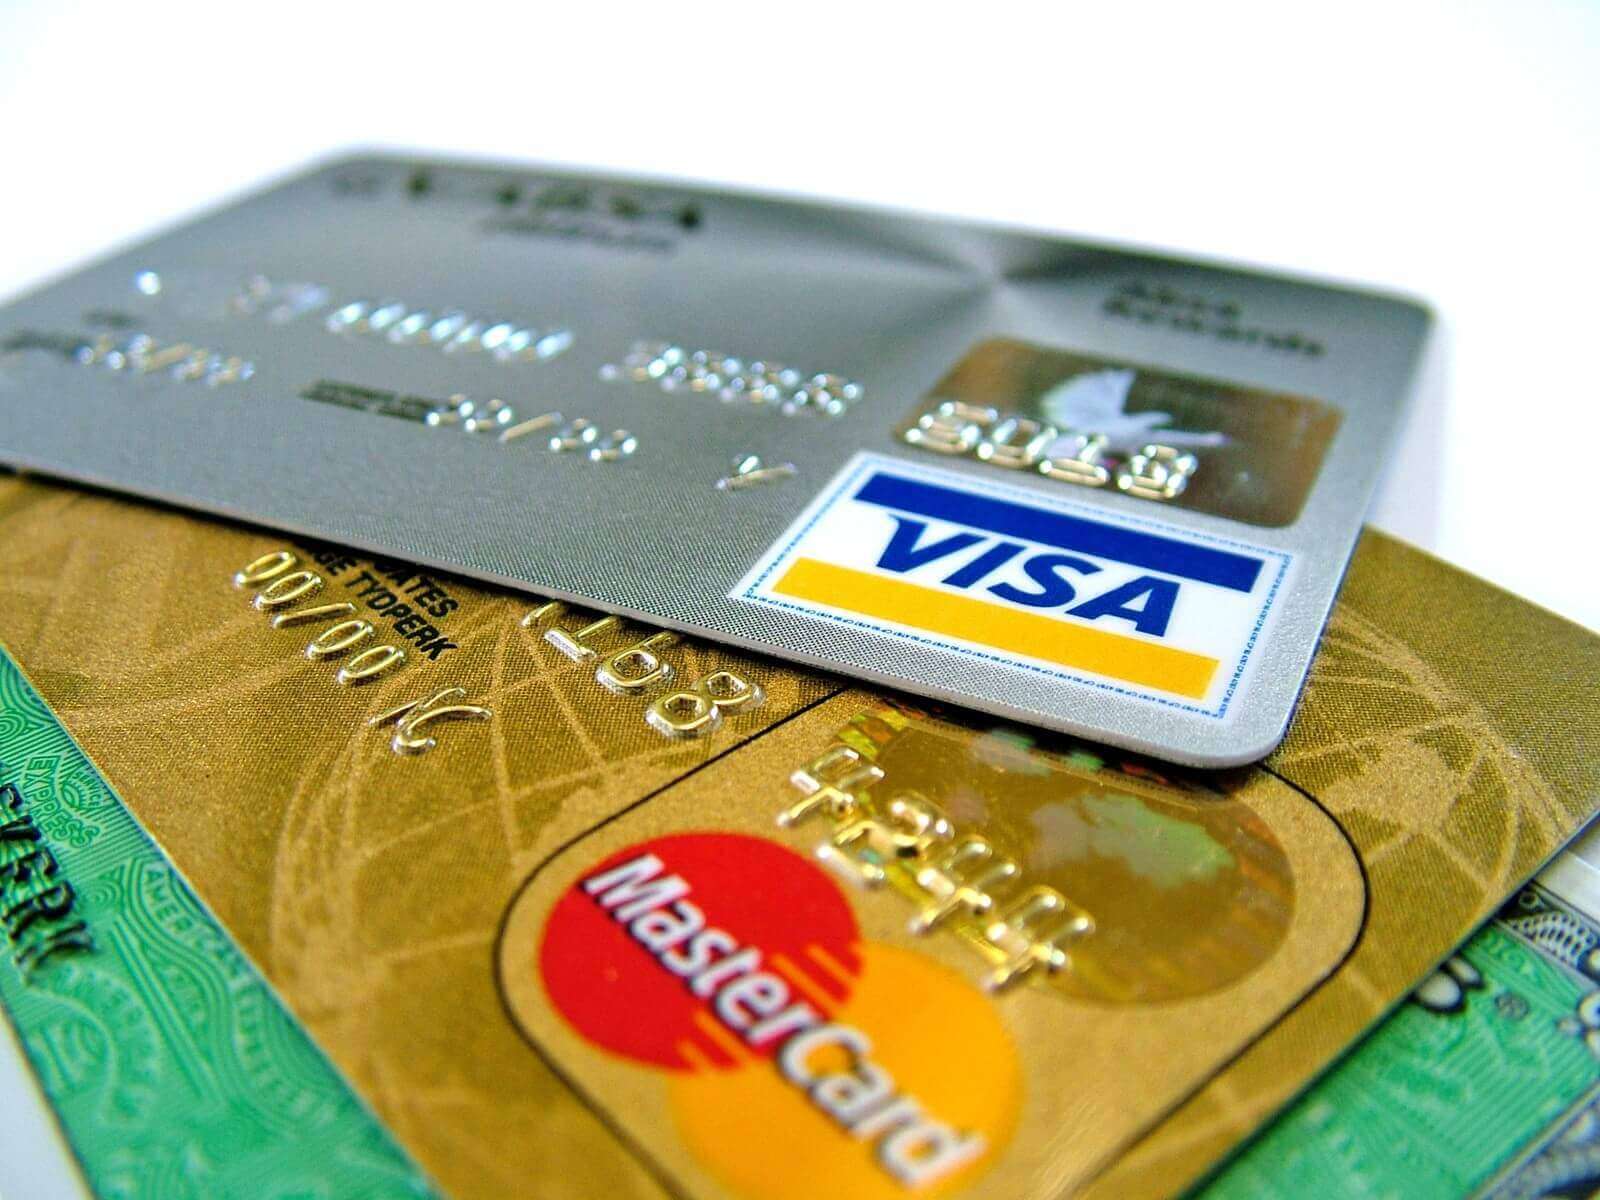 Milli kredi kartı 2016’da